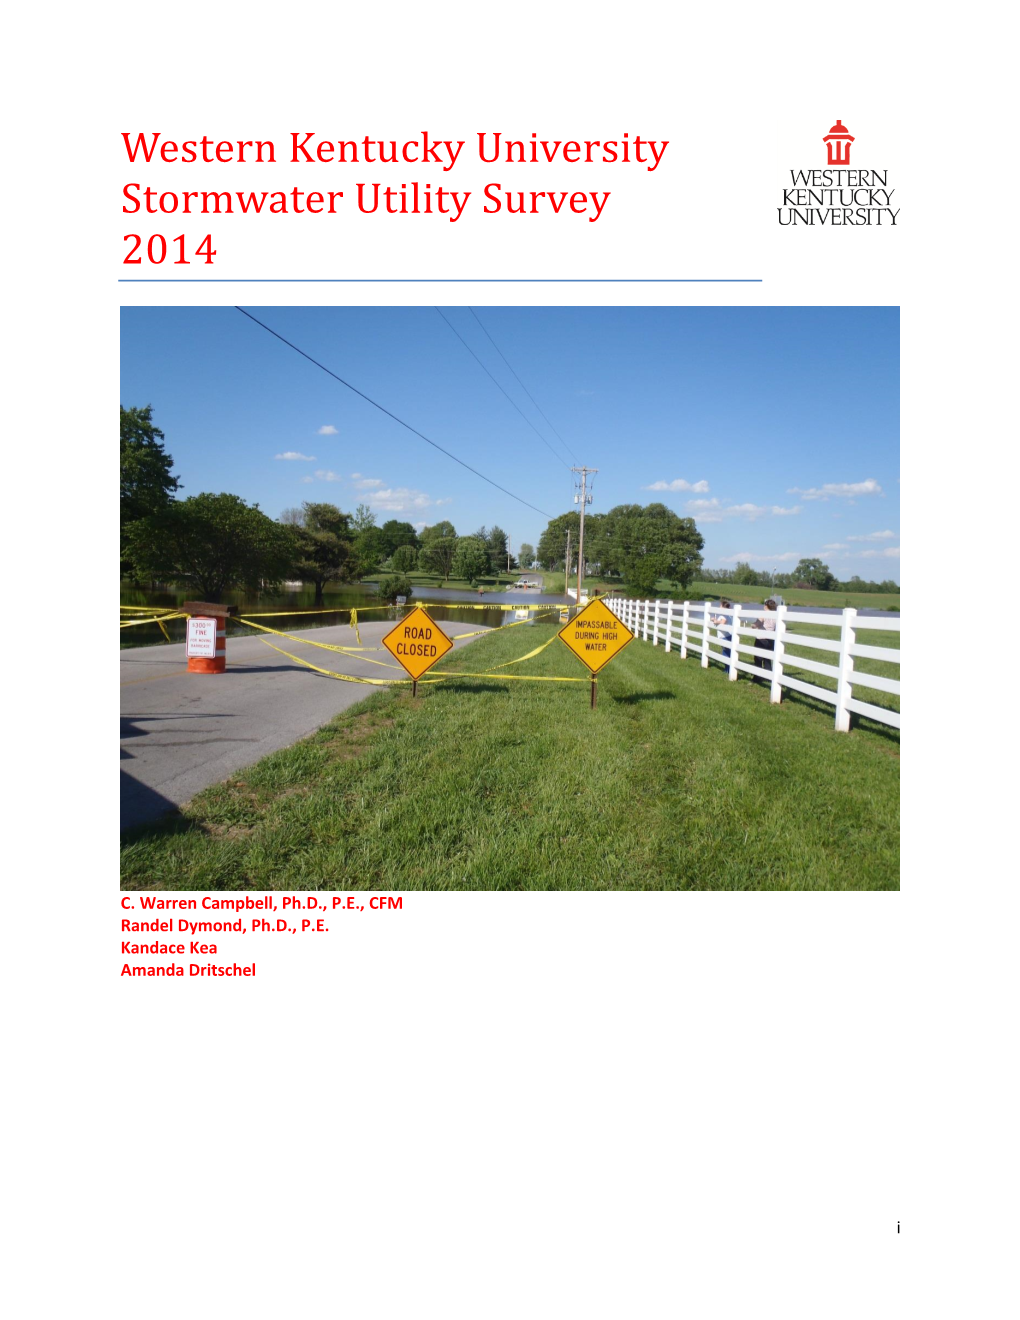 Western Kentucky University Stormwater Utility Survey 2014